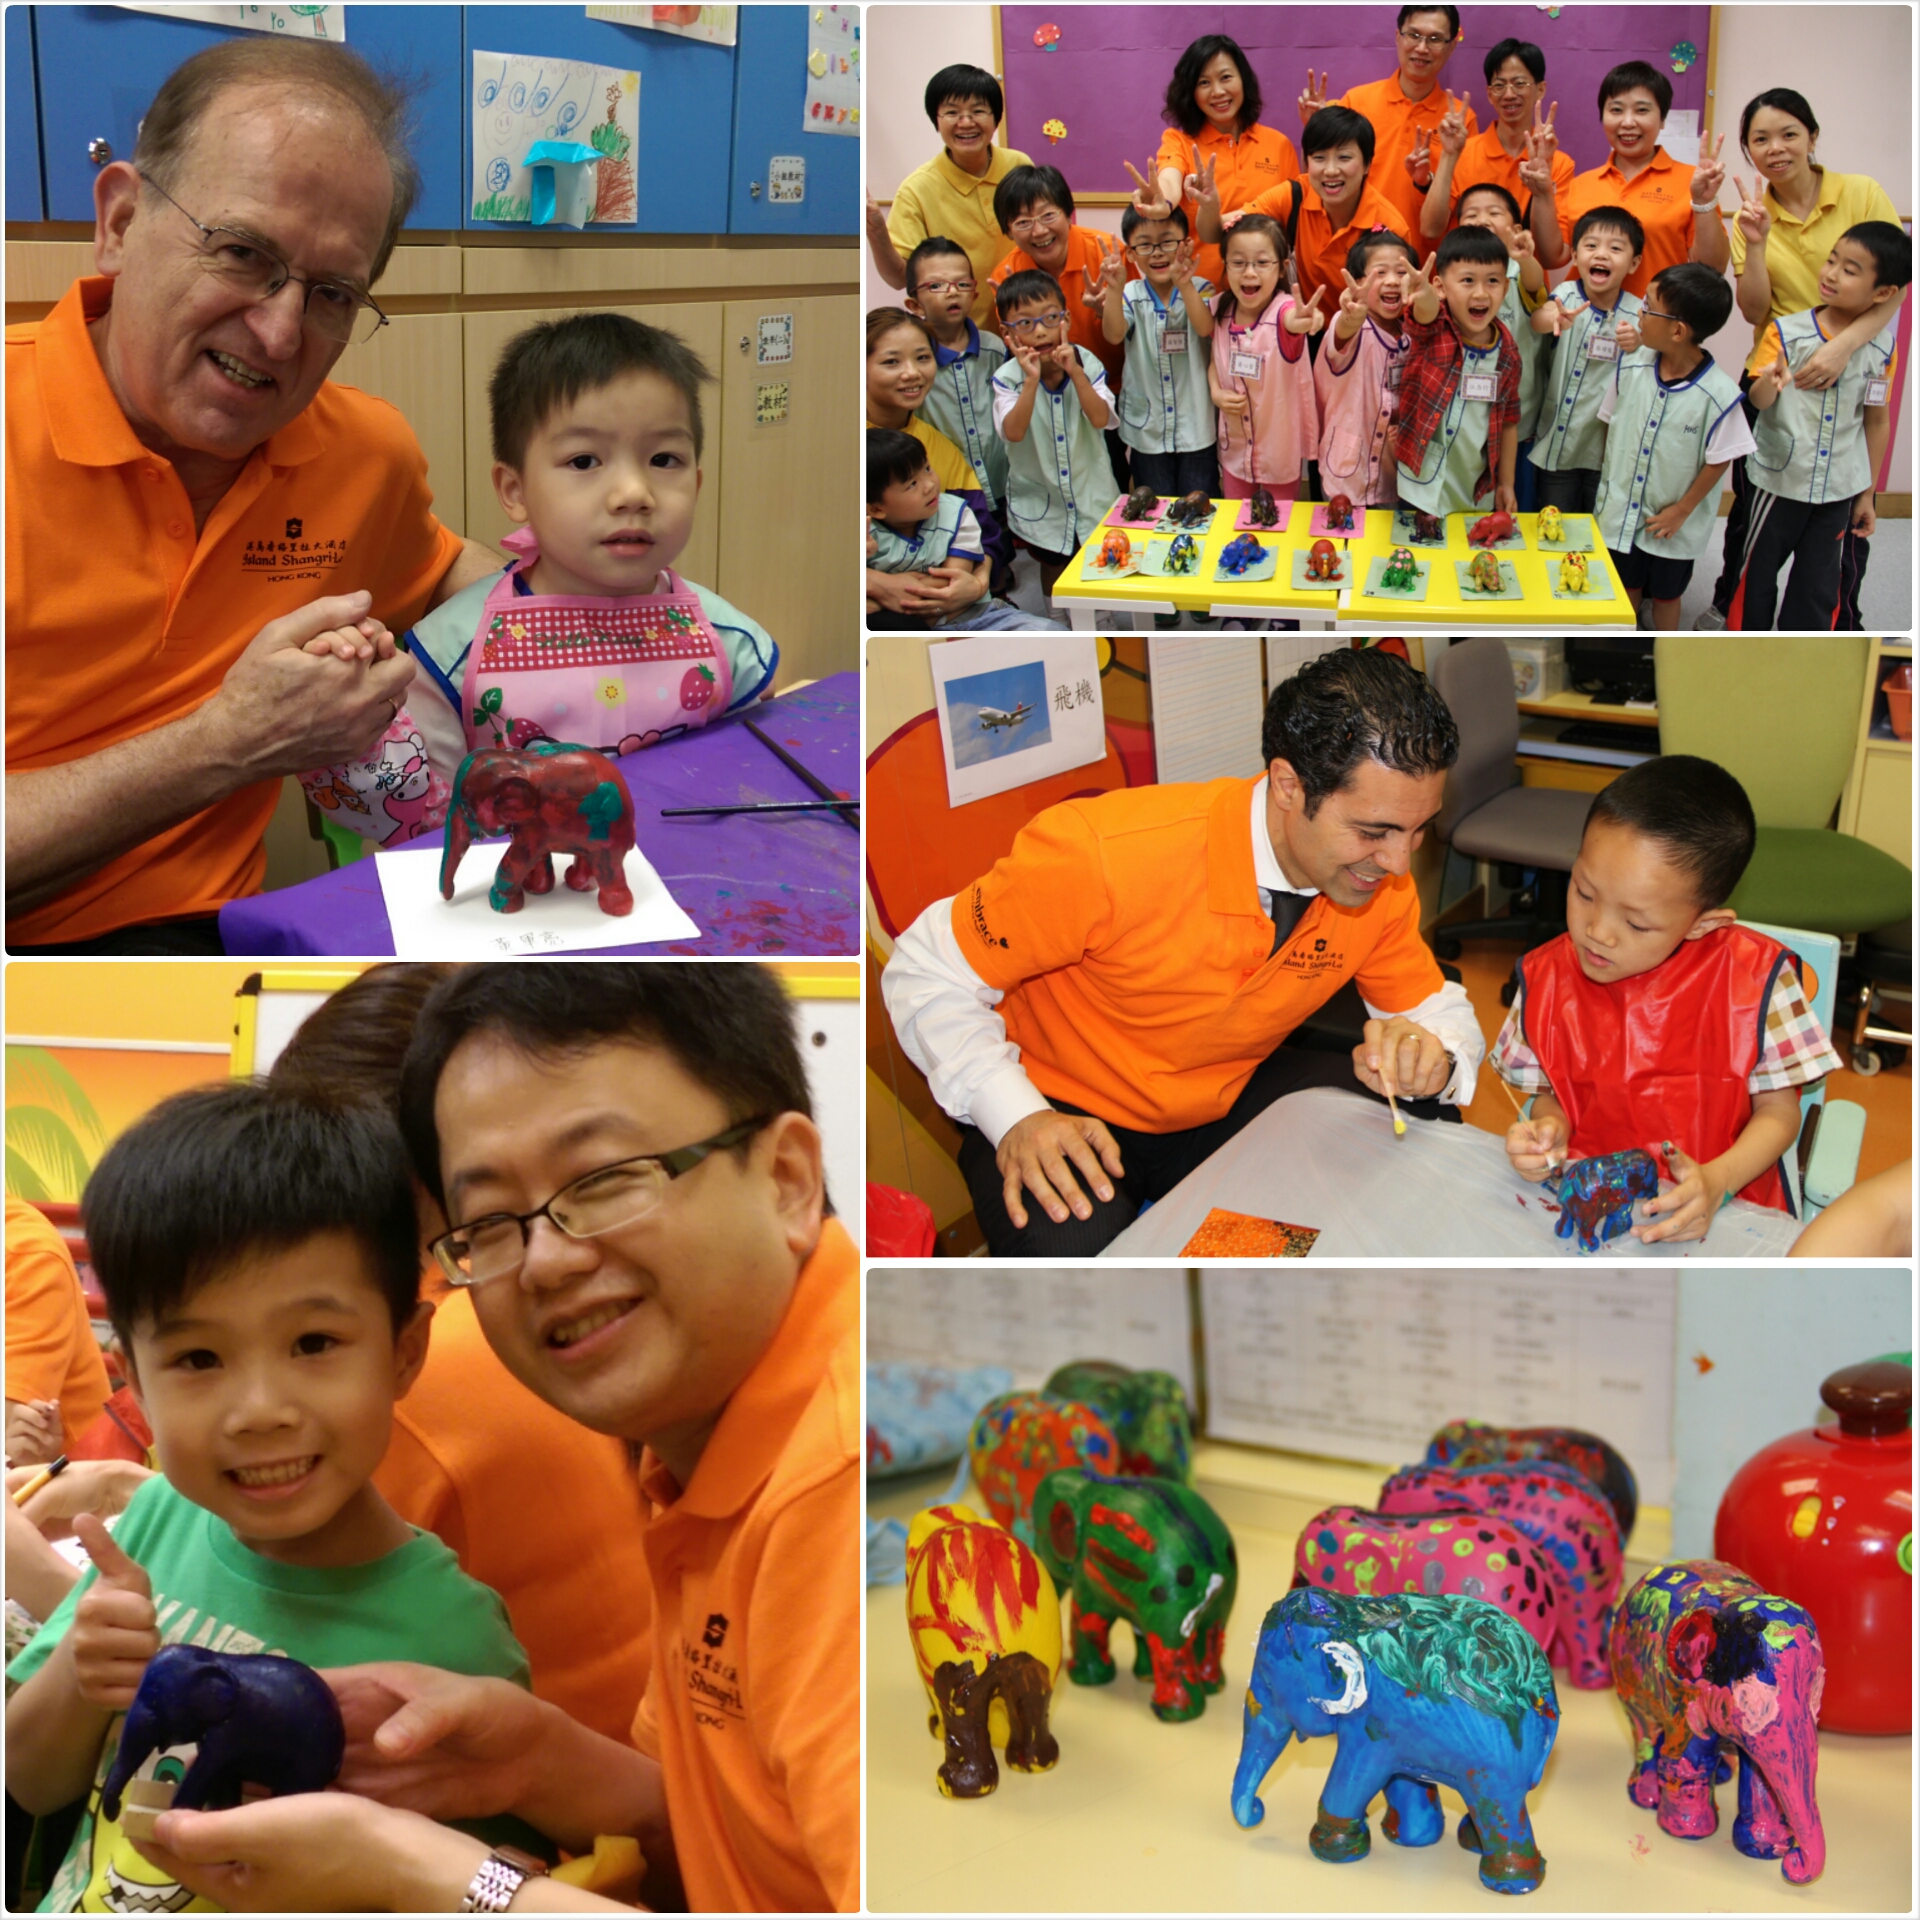 Elephant Parade, Island Shangri-La & Heep Hong Society Help Paint a Bright Future for Children